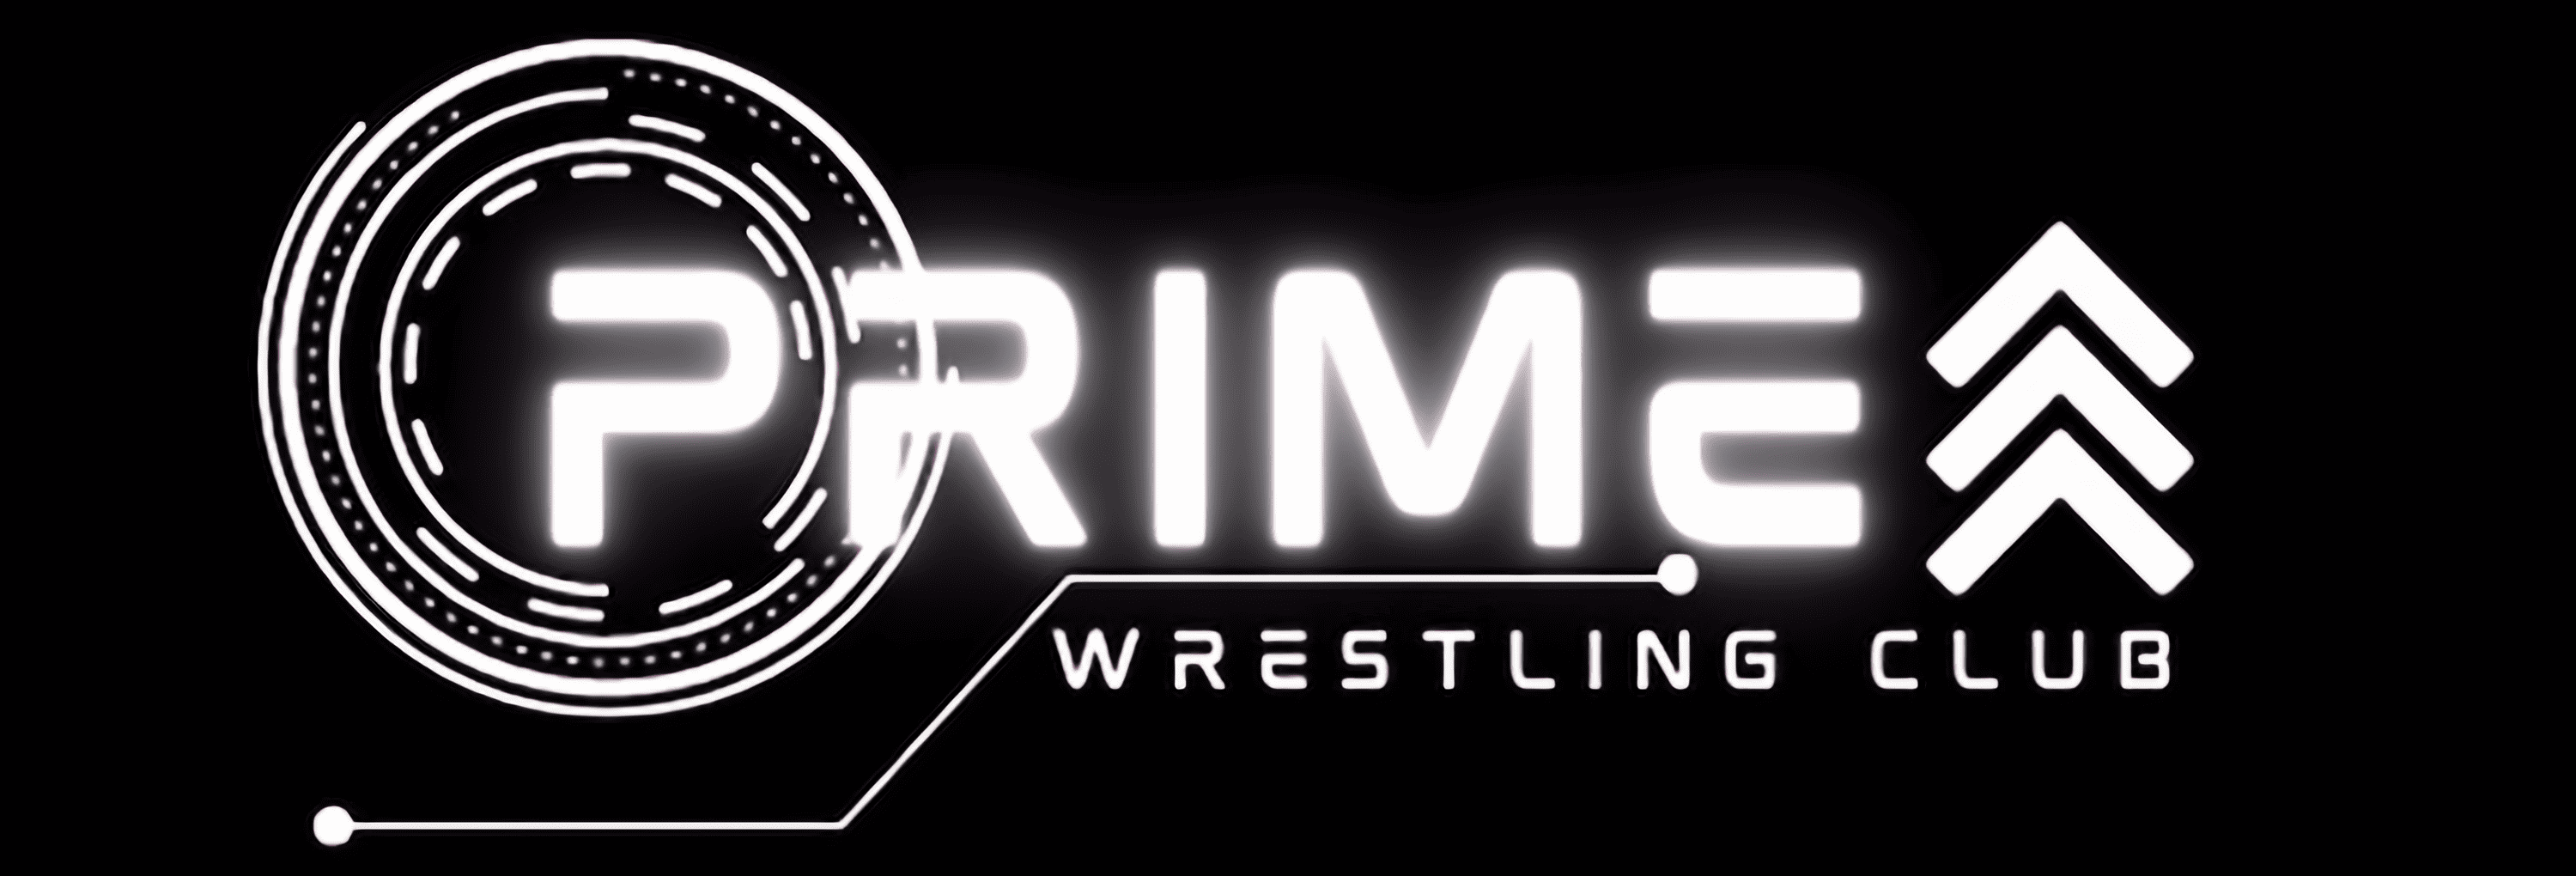 prime wrestling club logo.